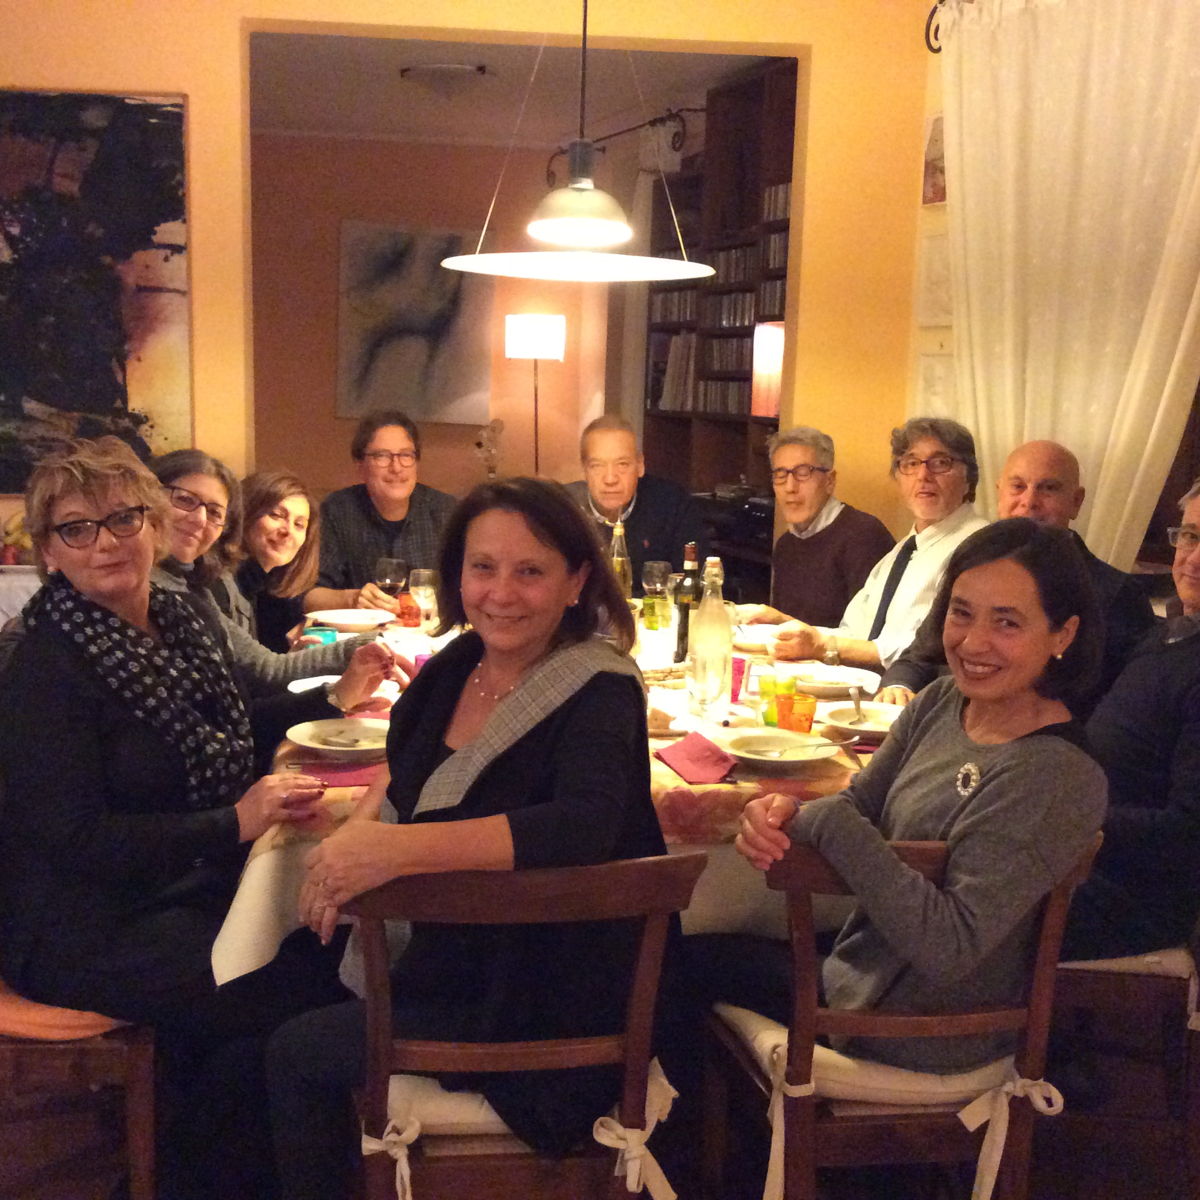 Friendly Umbrian dinner in Perugia